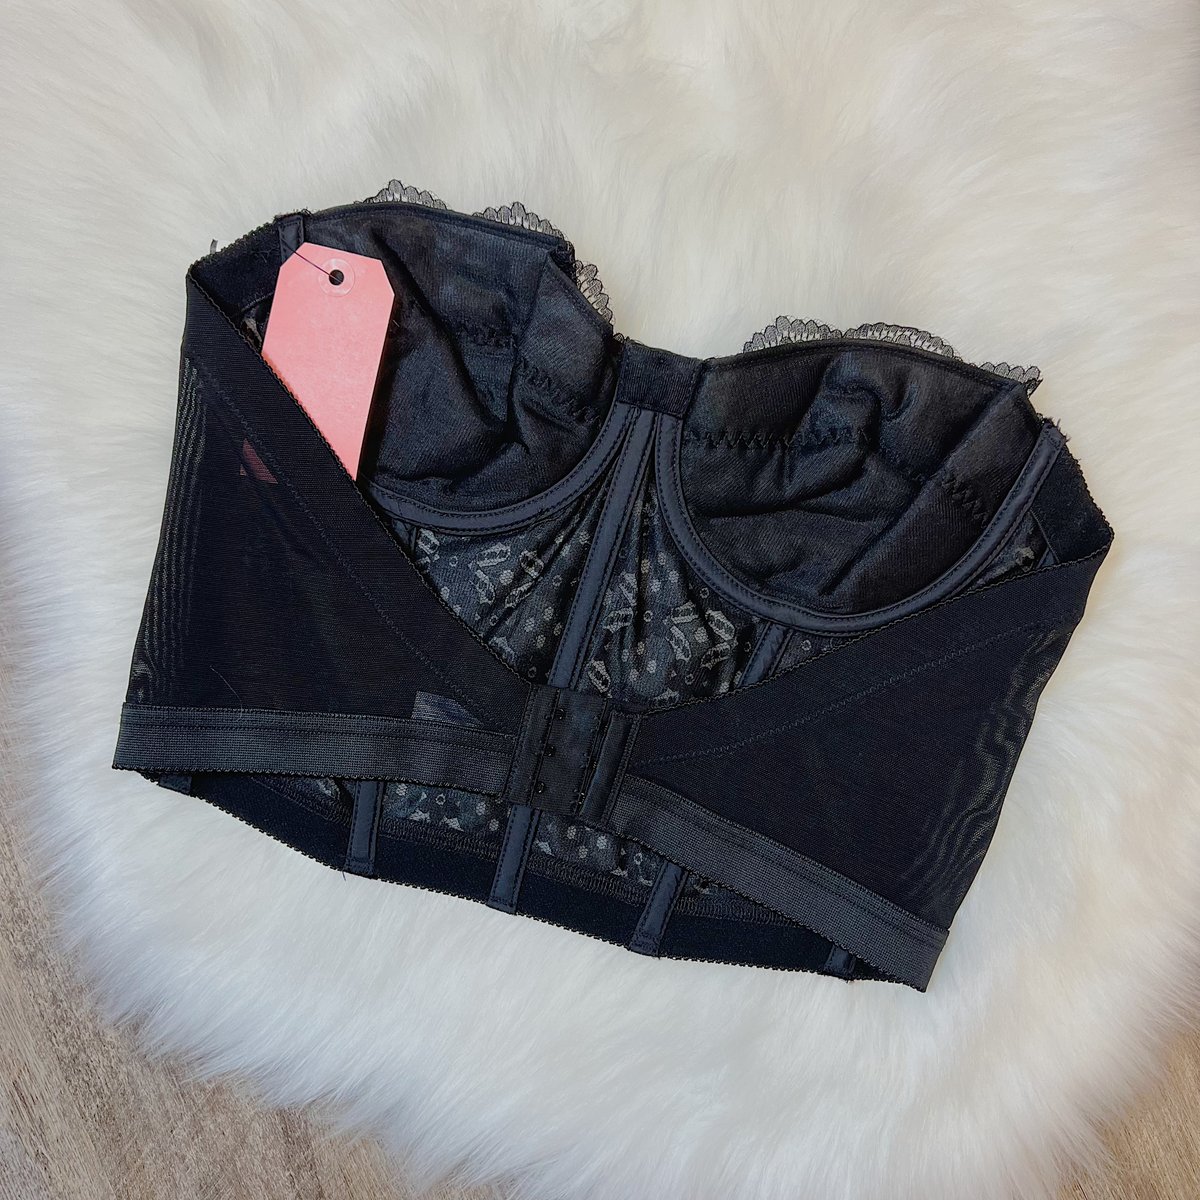 Size 38B/36C - Vintage Gelmart Black Lace Bustier NWT